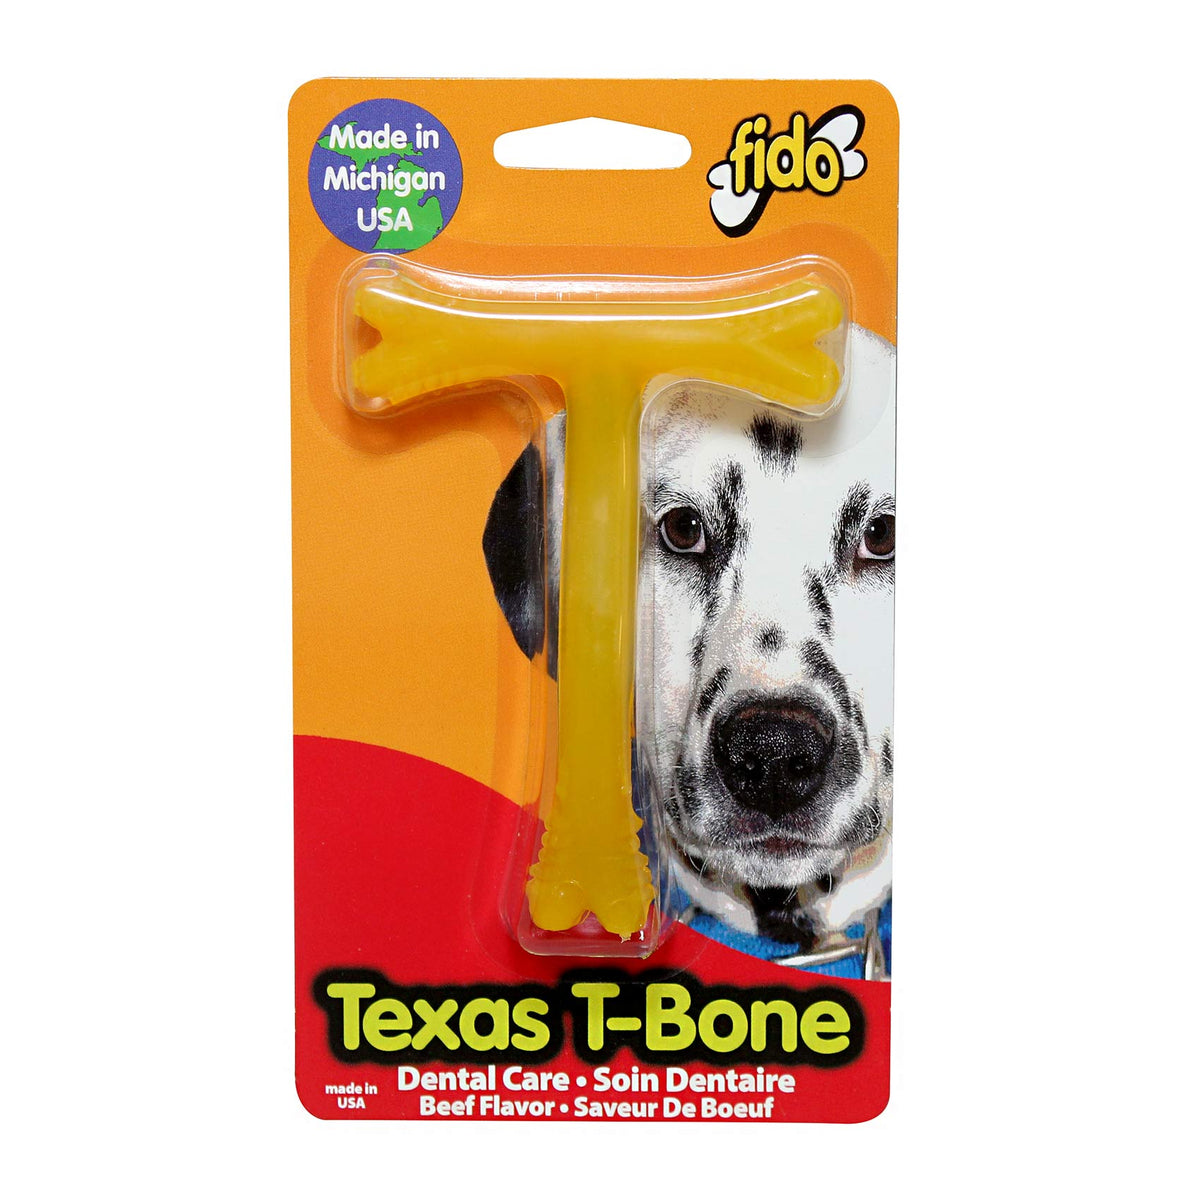 Texas T-Bone Dental Chew for Dogs